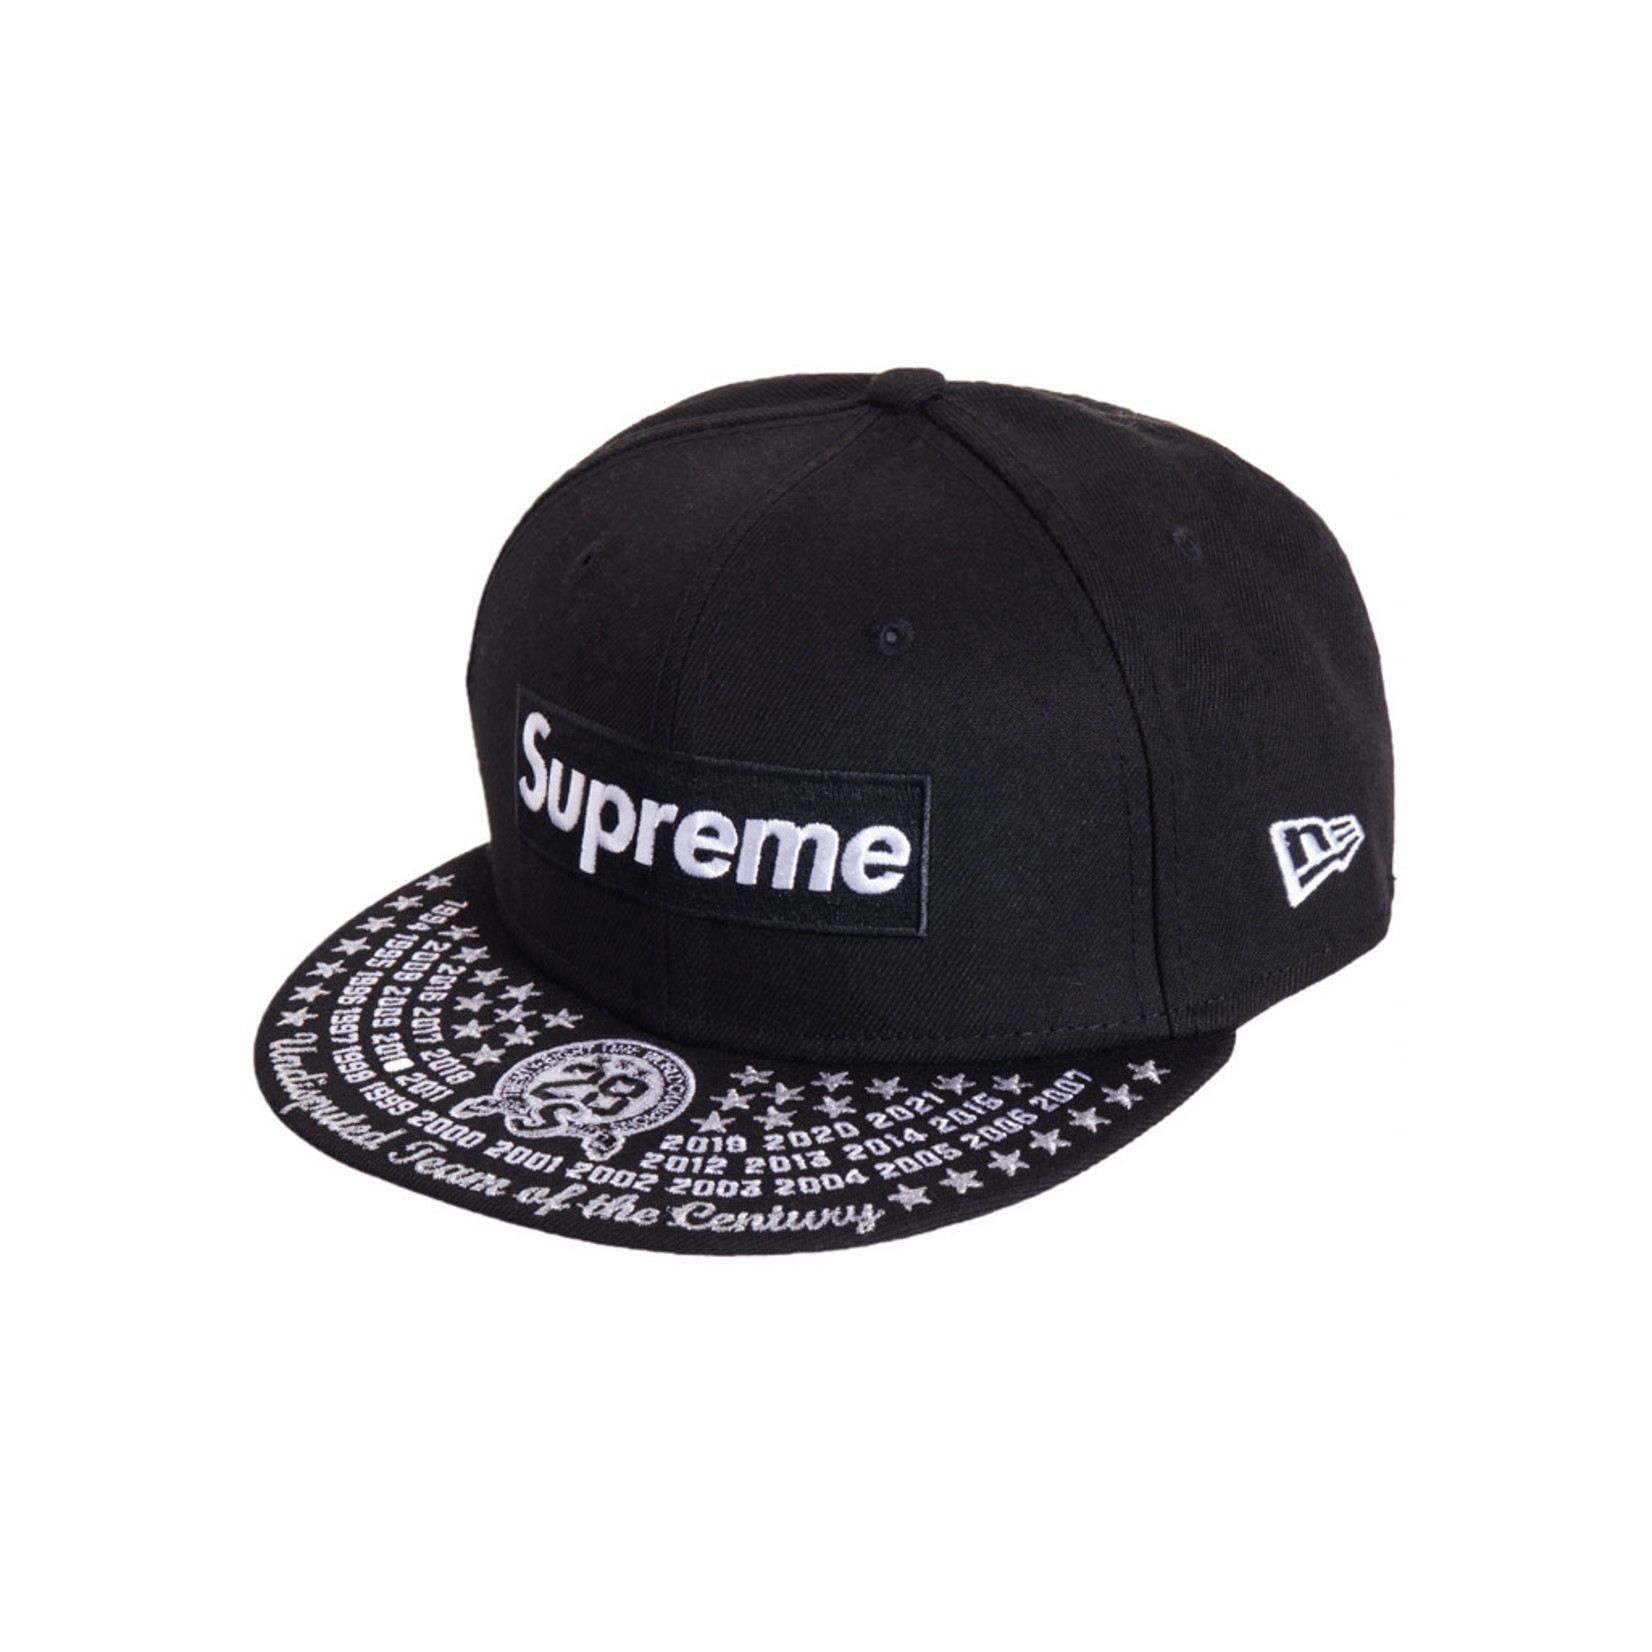 Supreme Supreme Undisputed Box Logo New Era Fitted Hat Black (7 1/4)